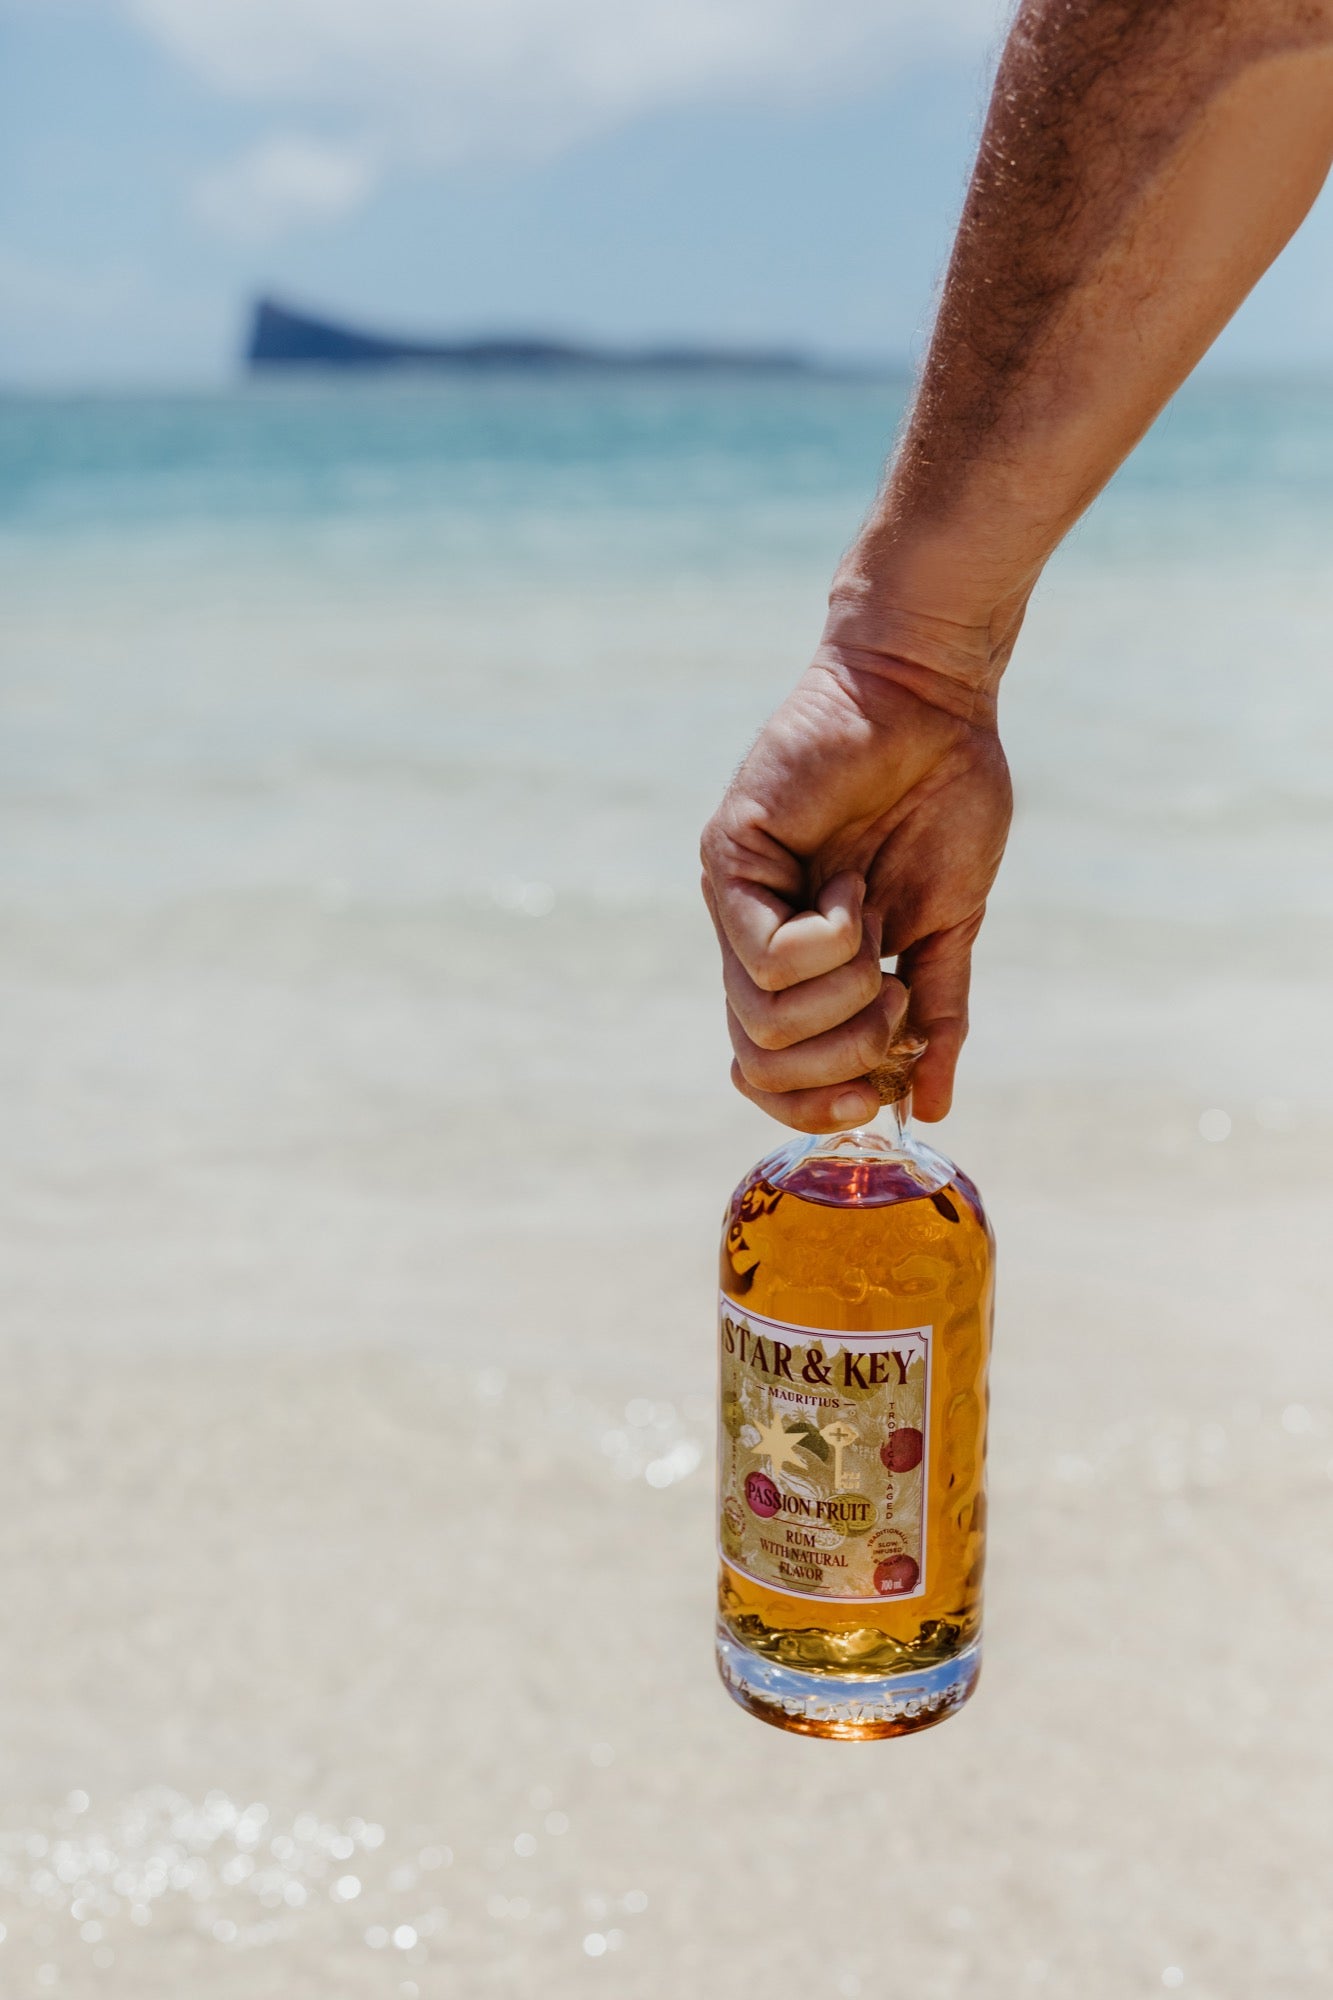 Star & Key Passion Fruit Rum